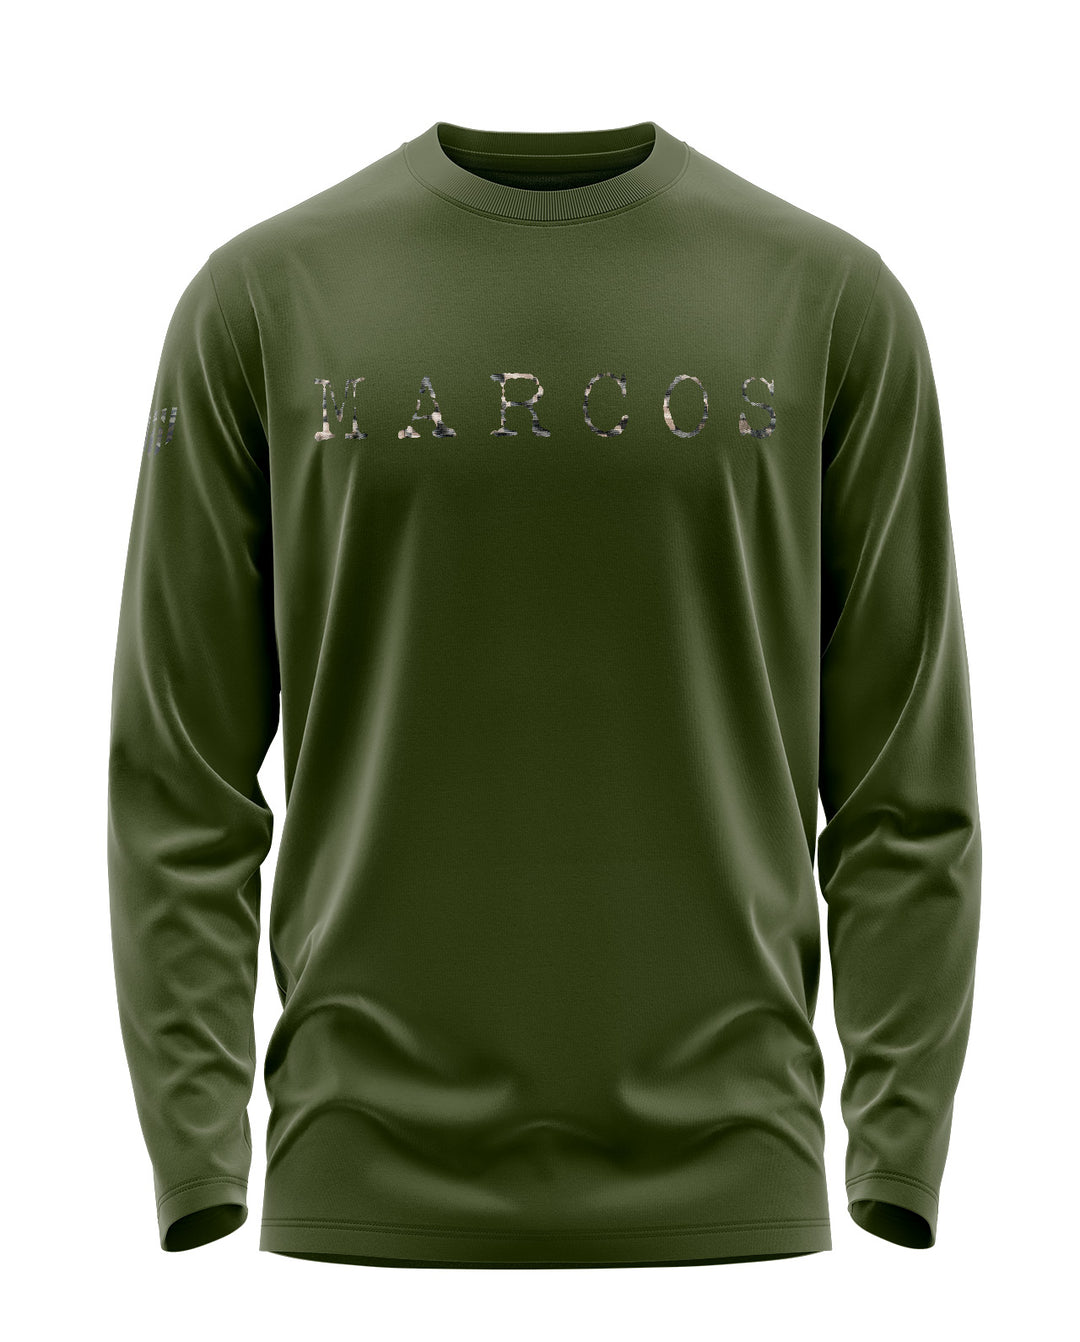 MARCOS CAMO Full Sleeve T-Shirt